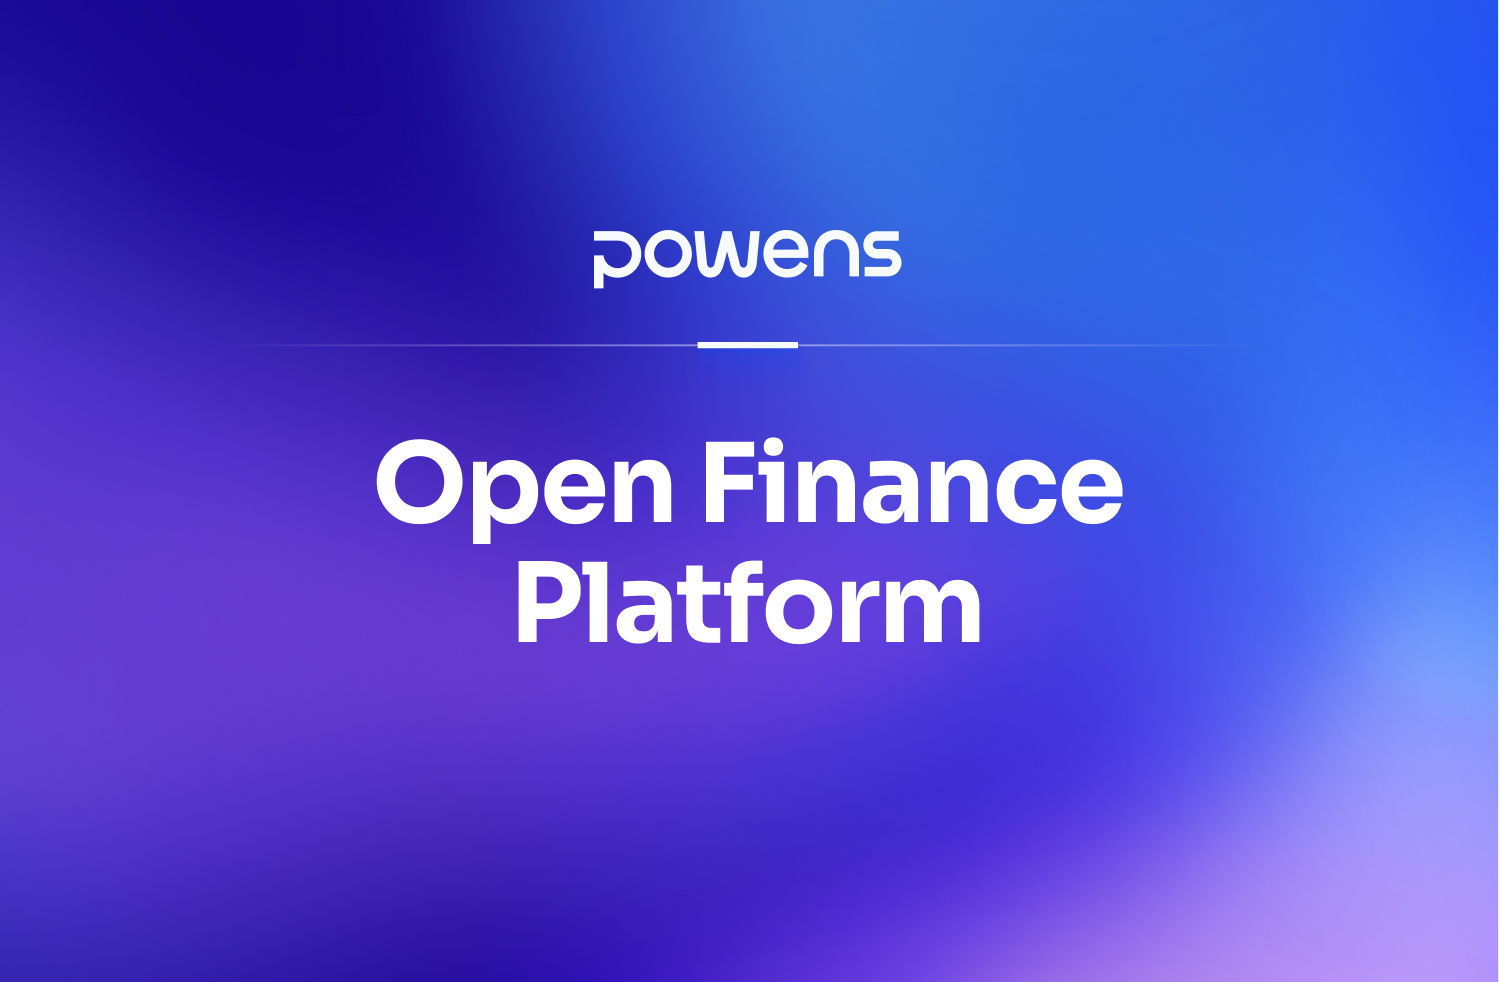 Open Finance Platform